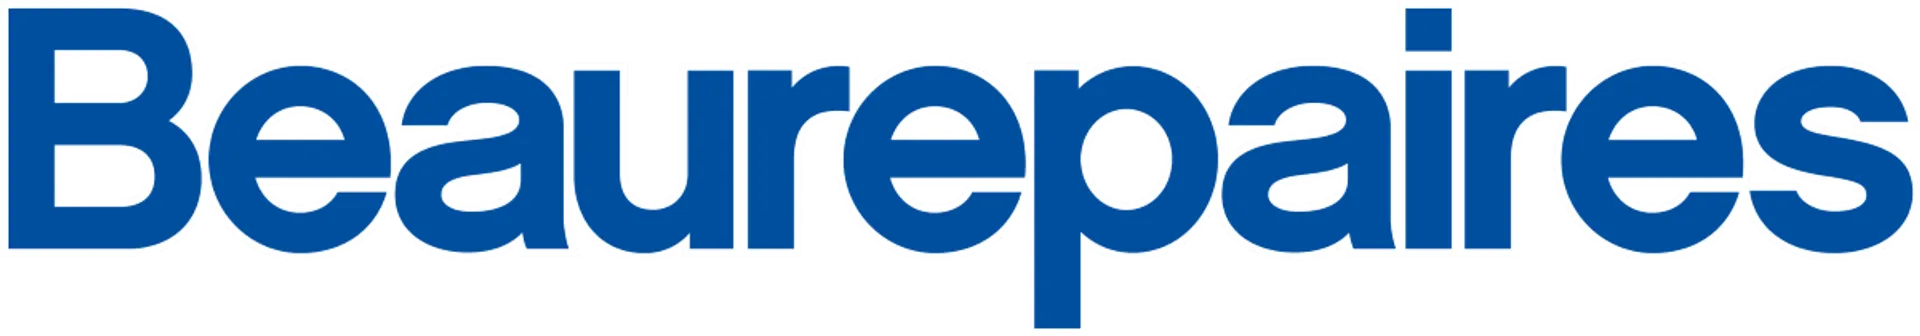 BEAUREPAIRES logo